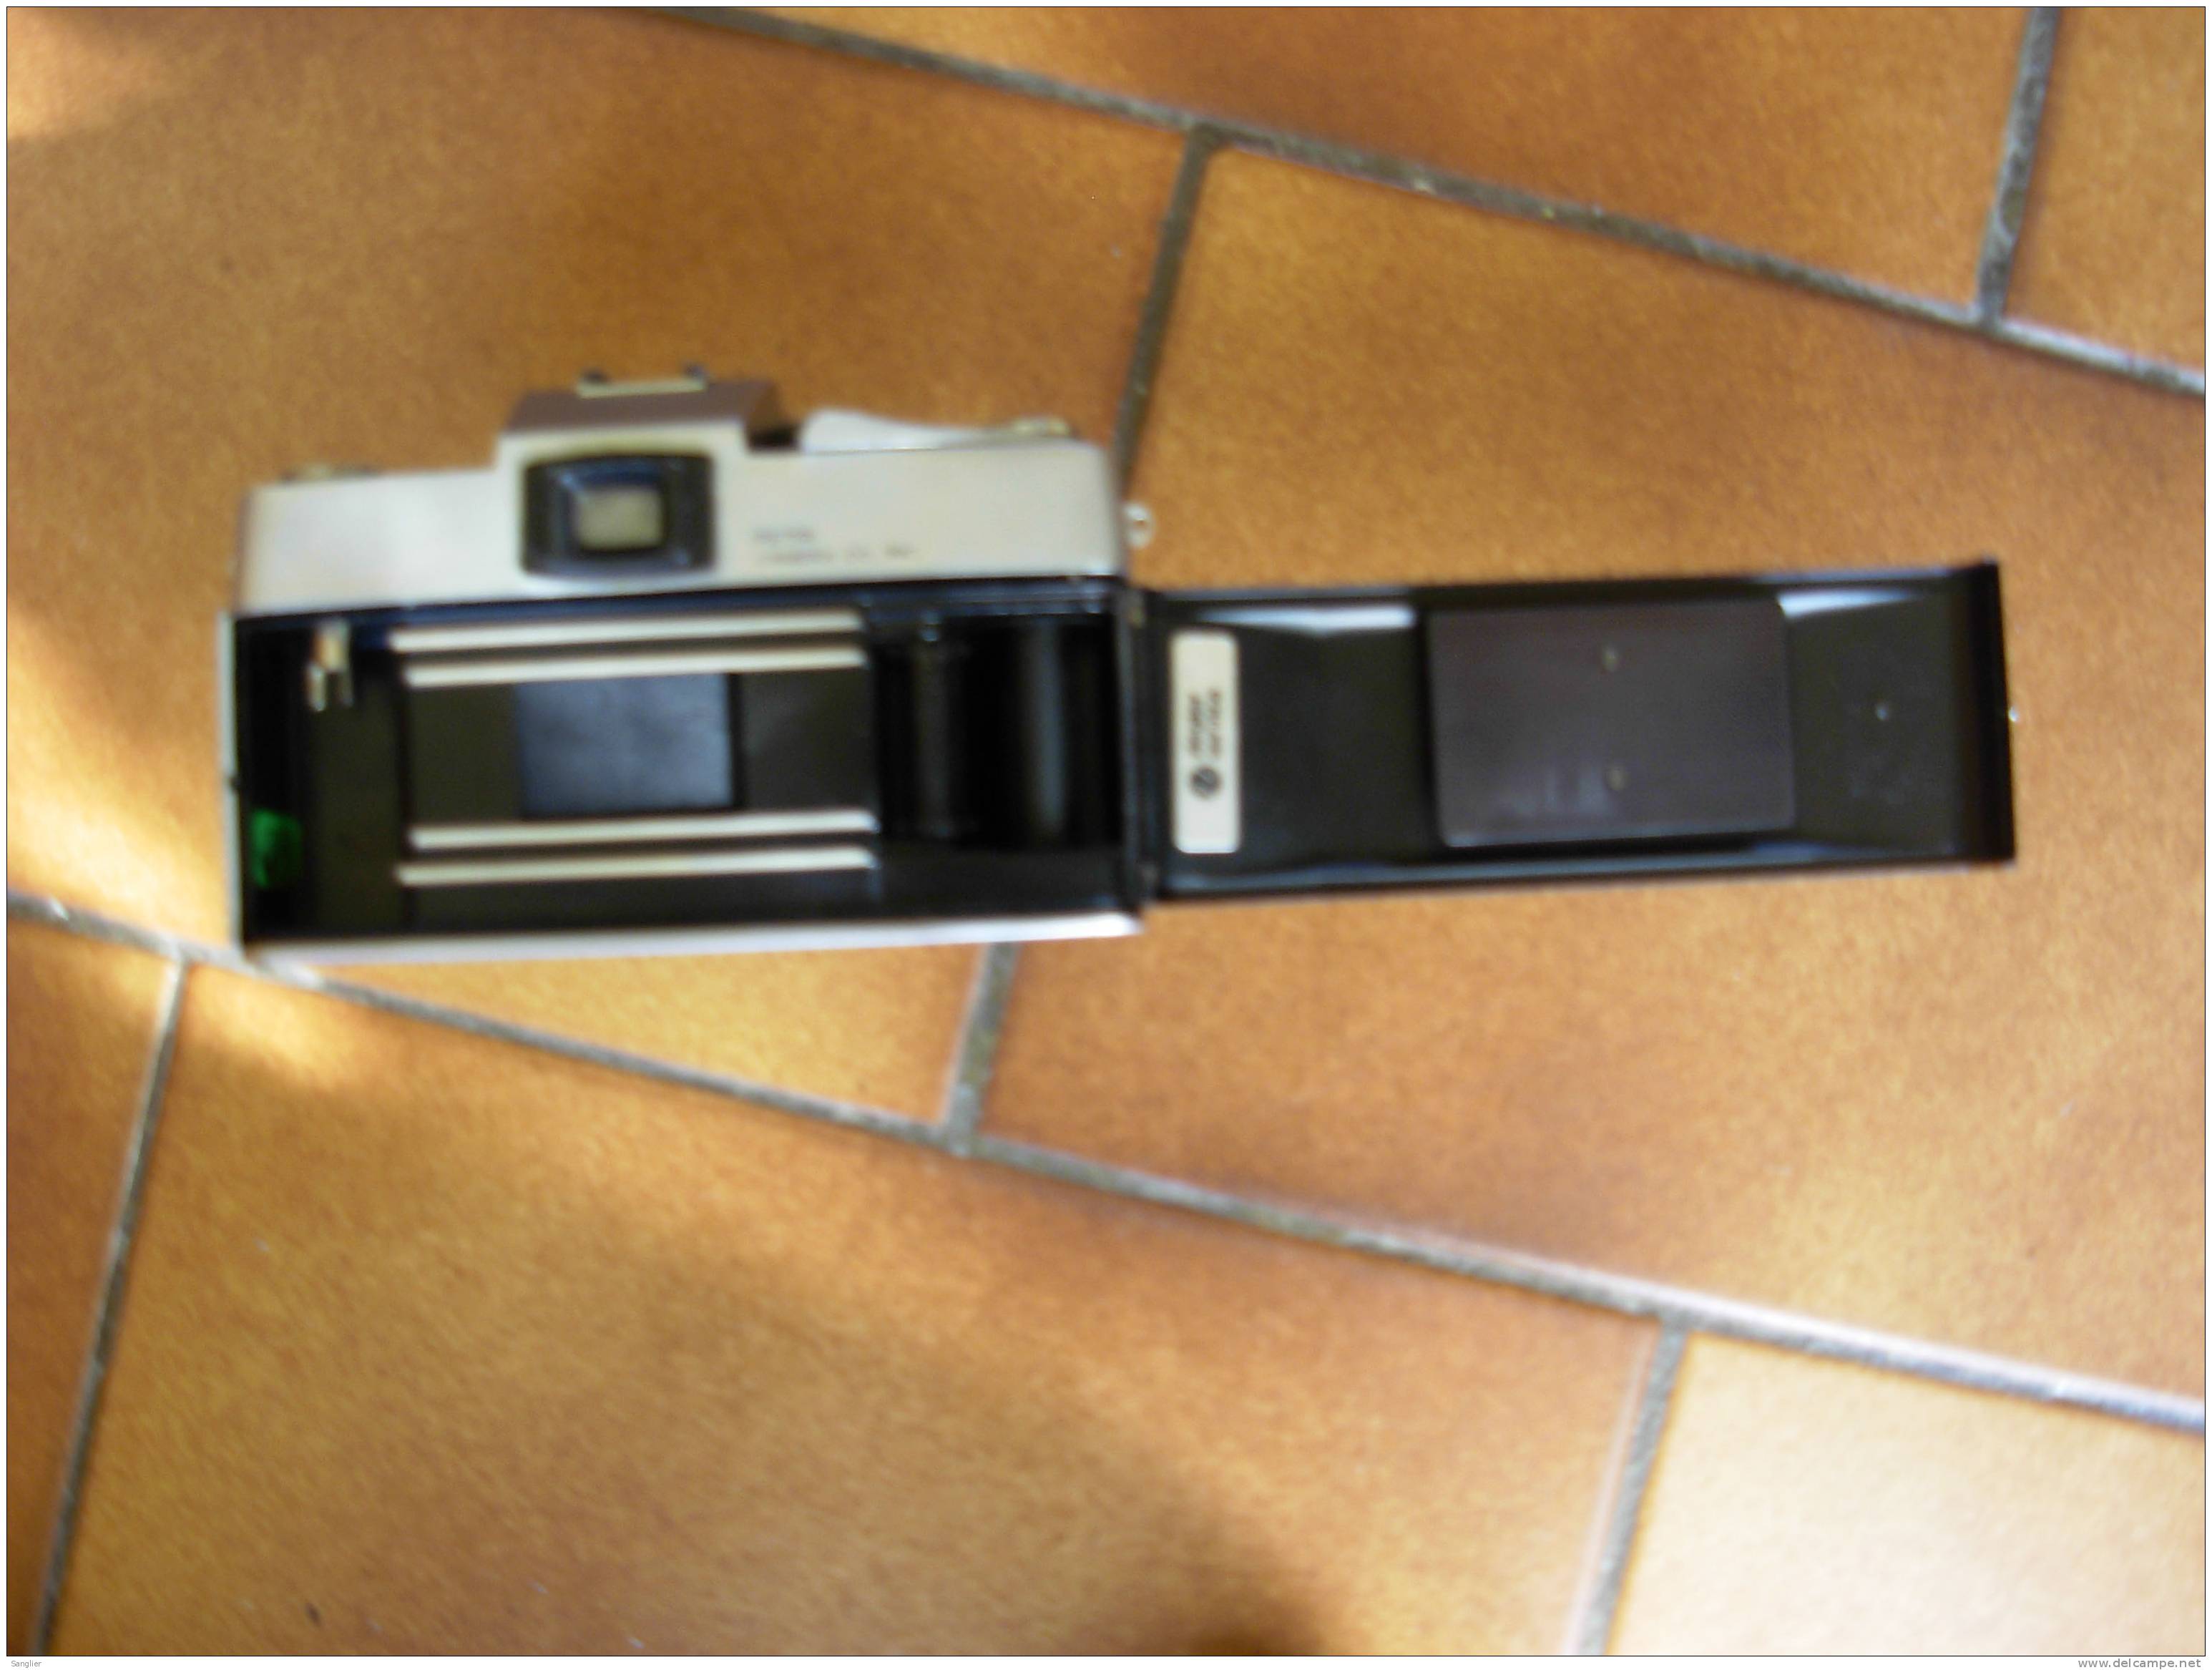 APPAREIL PHOTO  REFLEX PETRI - TRES RARE - TRES BON ETAT - A FAIRE REVISER  DECLANCHEUR - Cameras